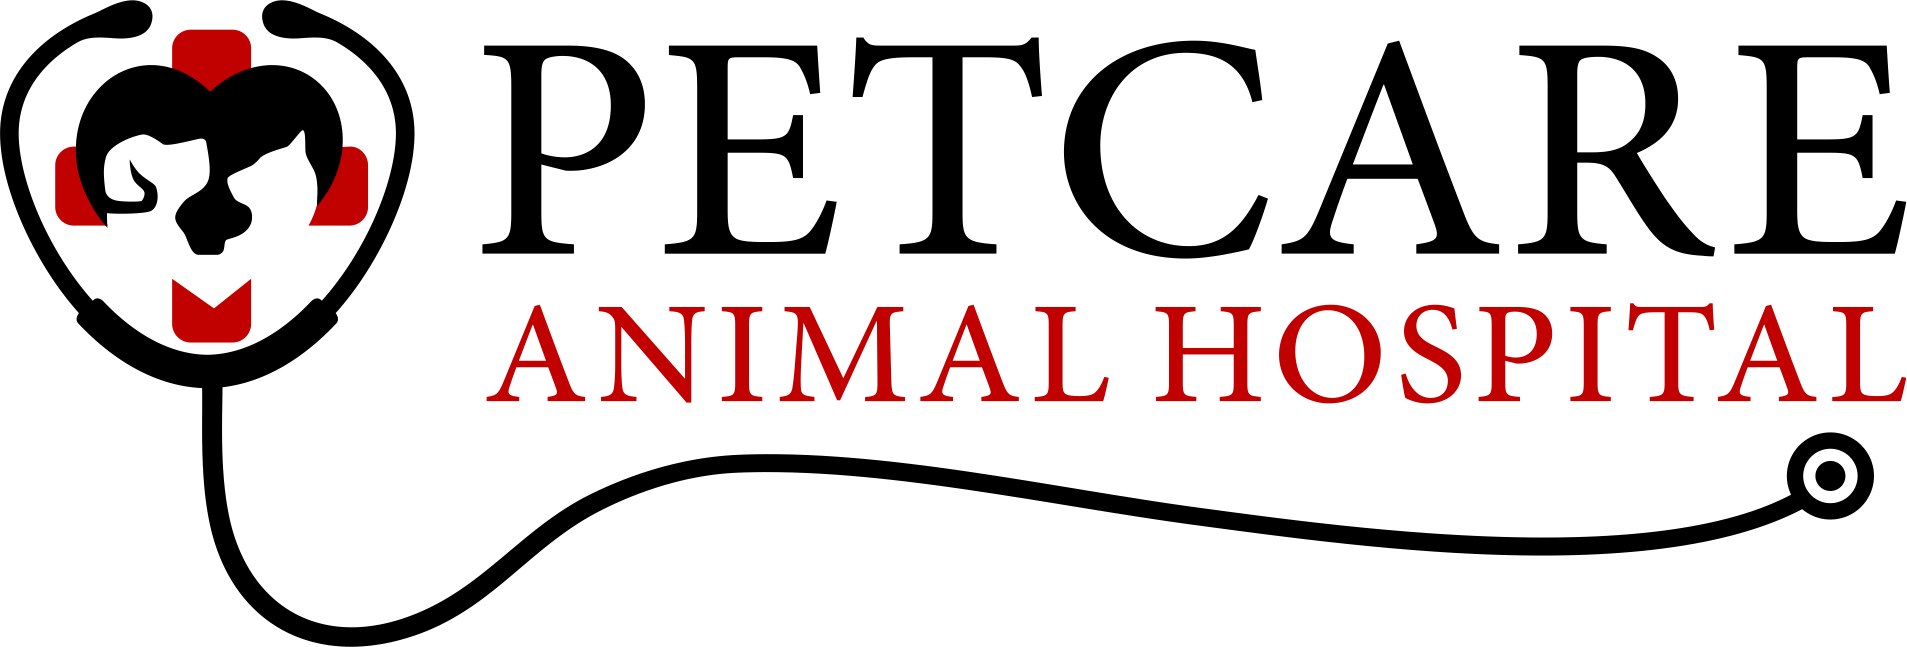 Pet Care Animal Hospital